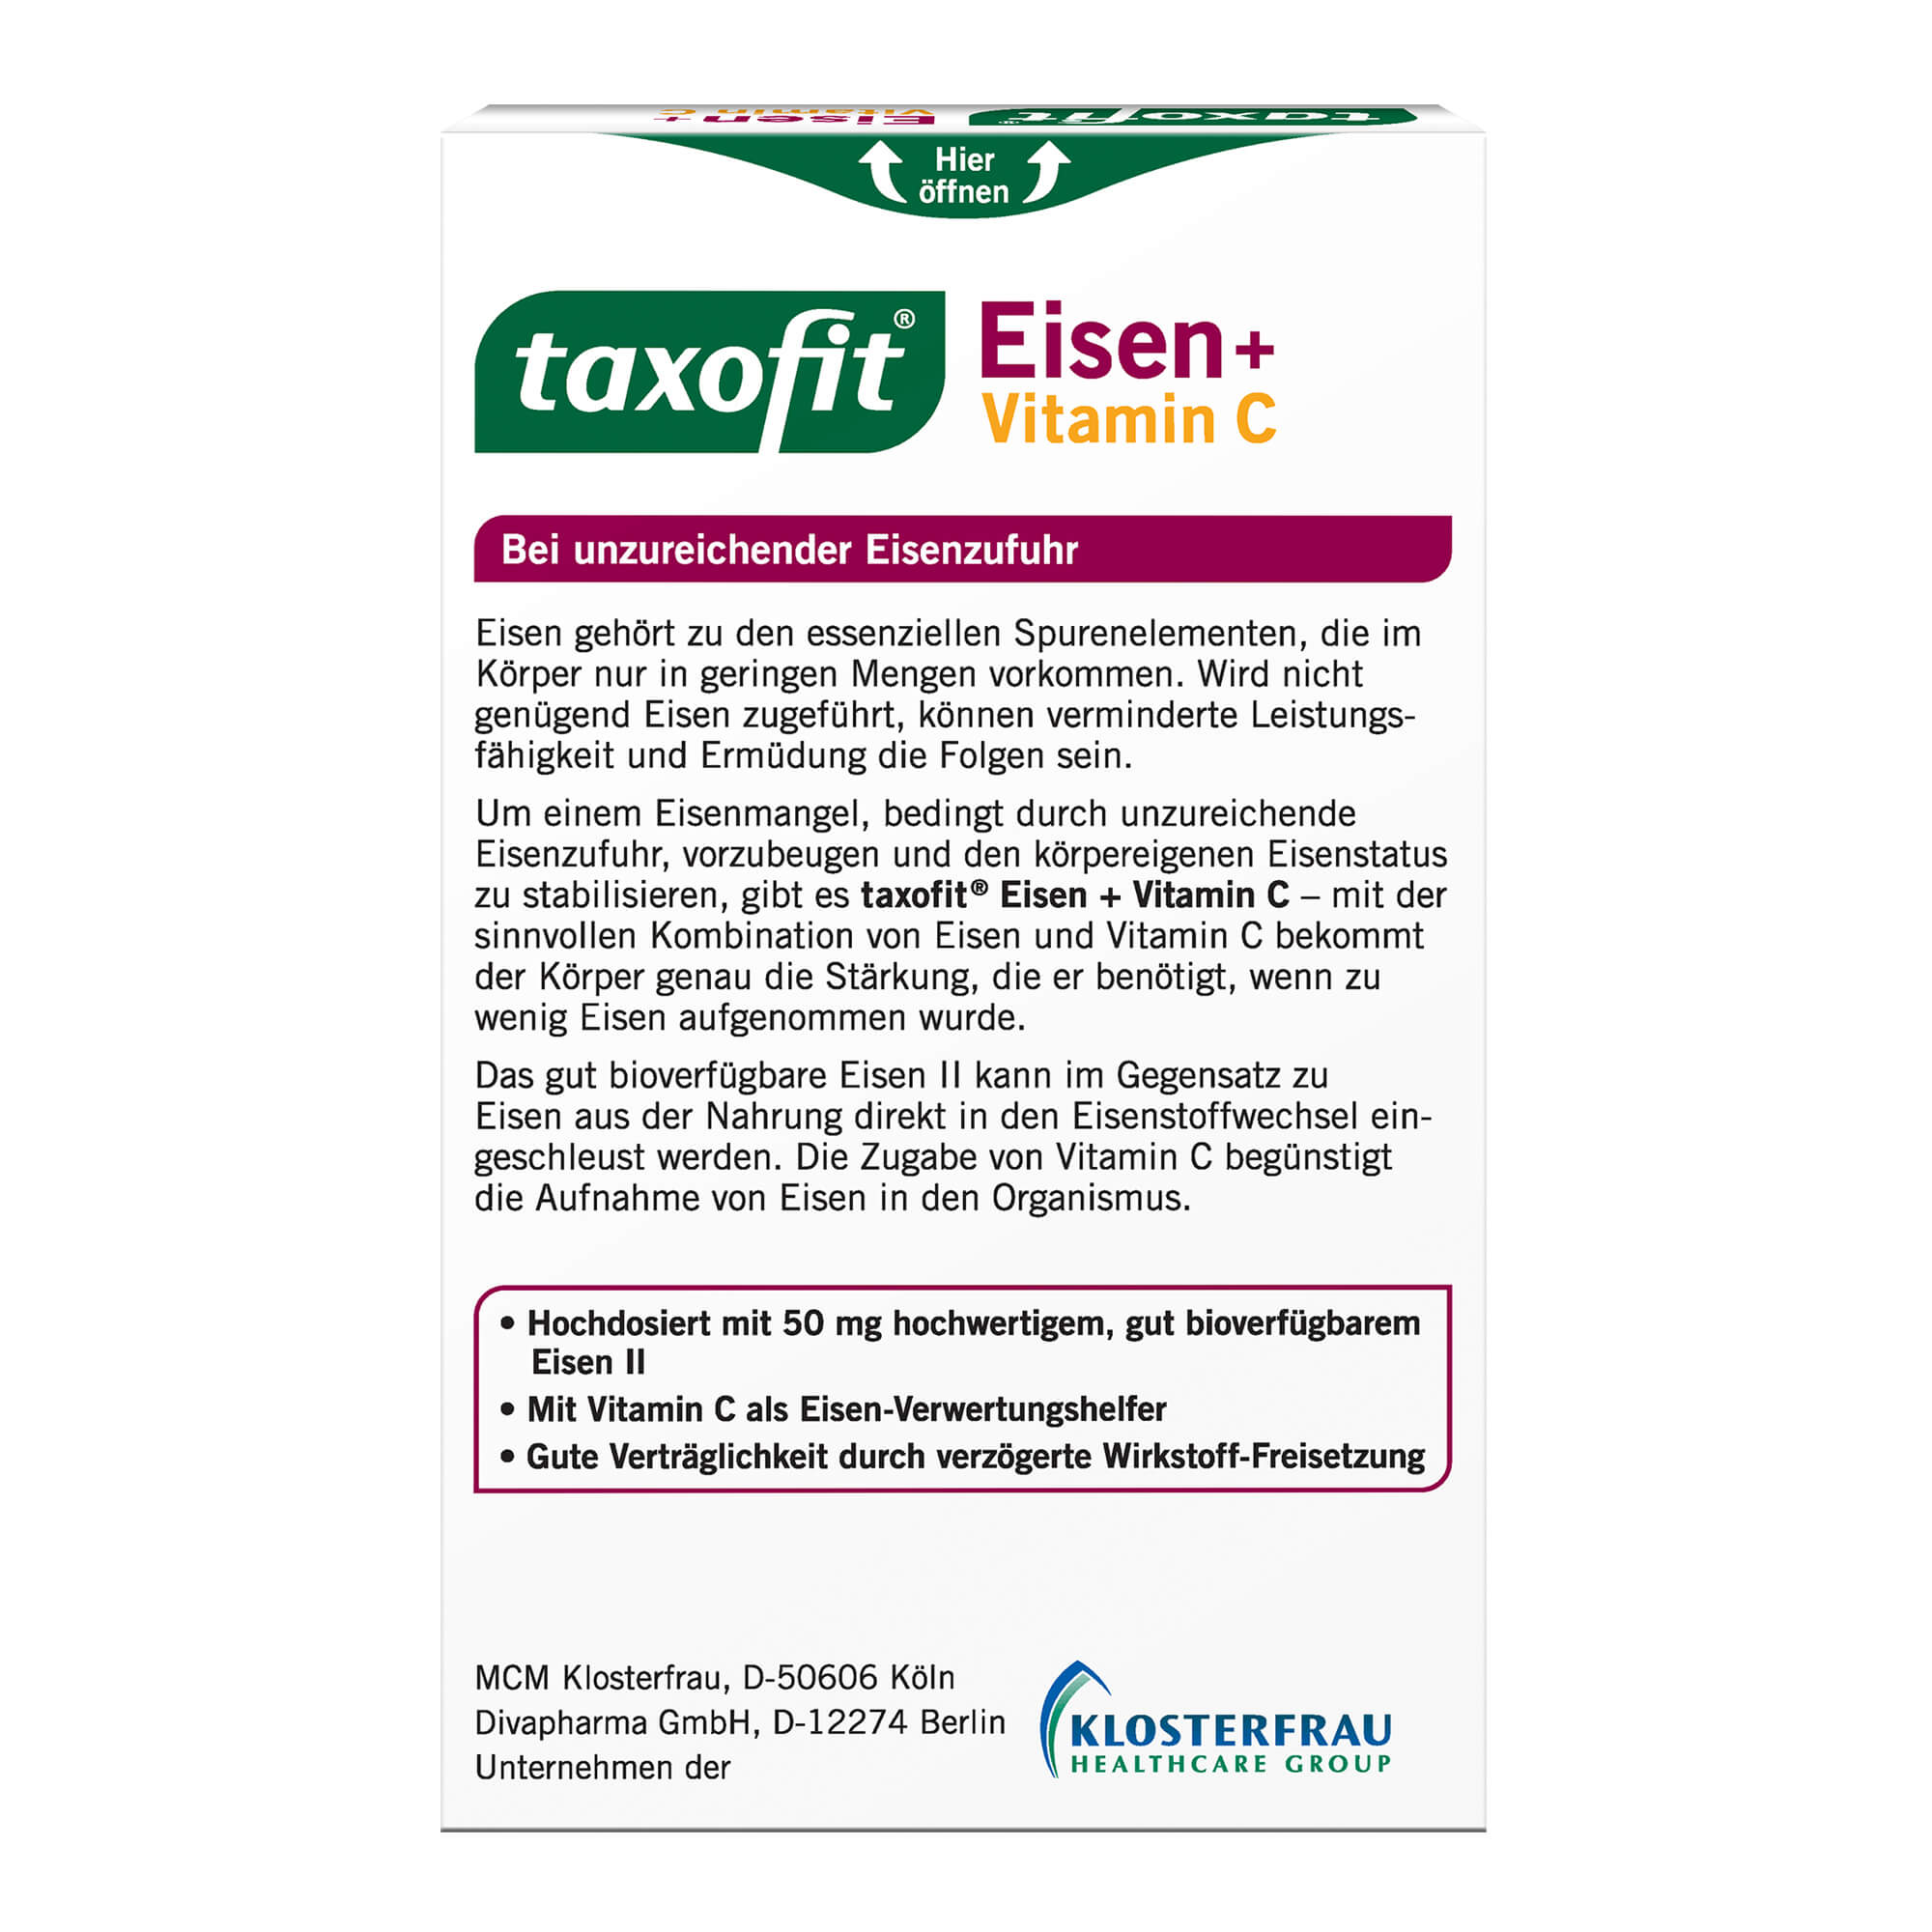 Taxofit Eisen+Vitamin C Kapseln Packungsrückseite